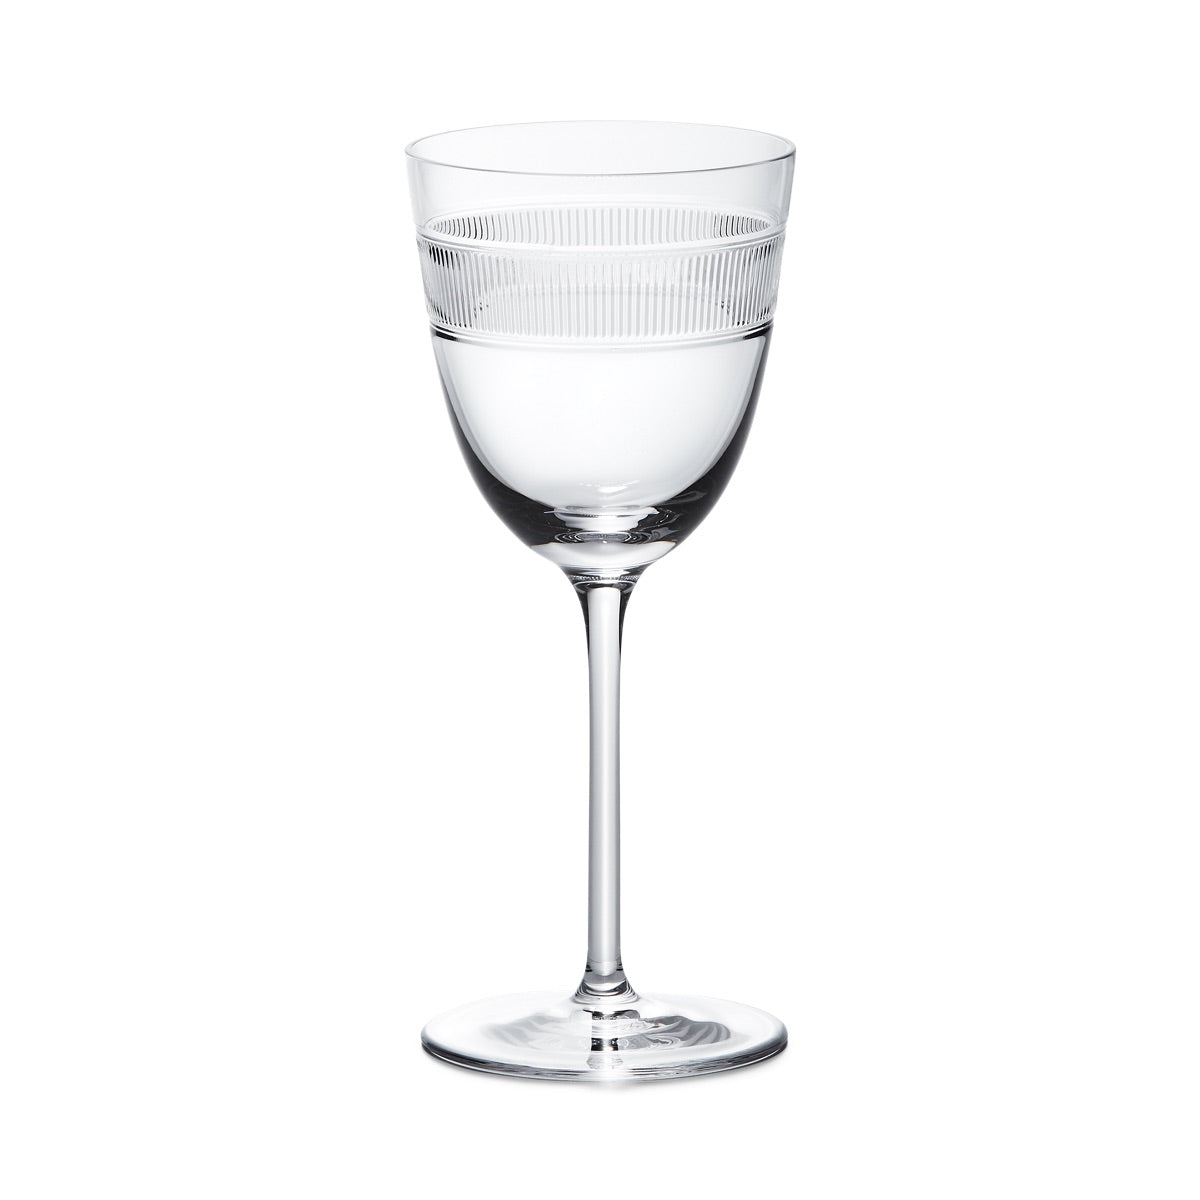 Langley White Wine Glass